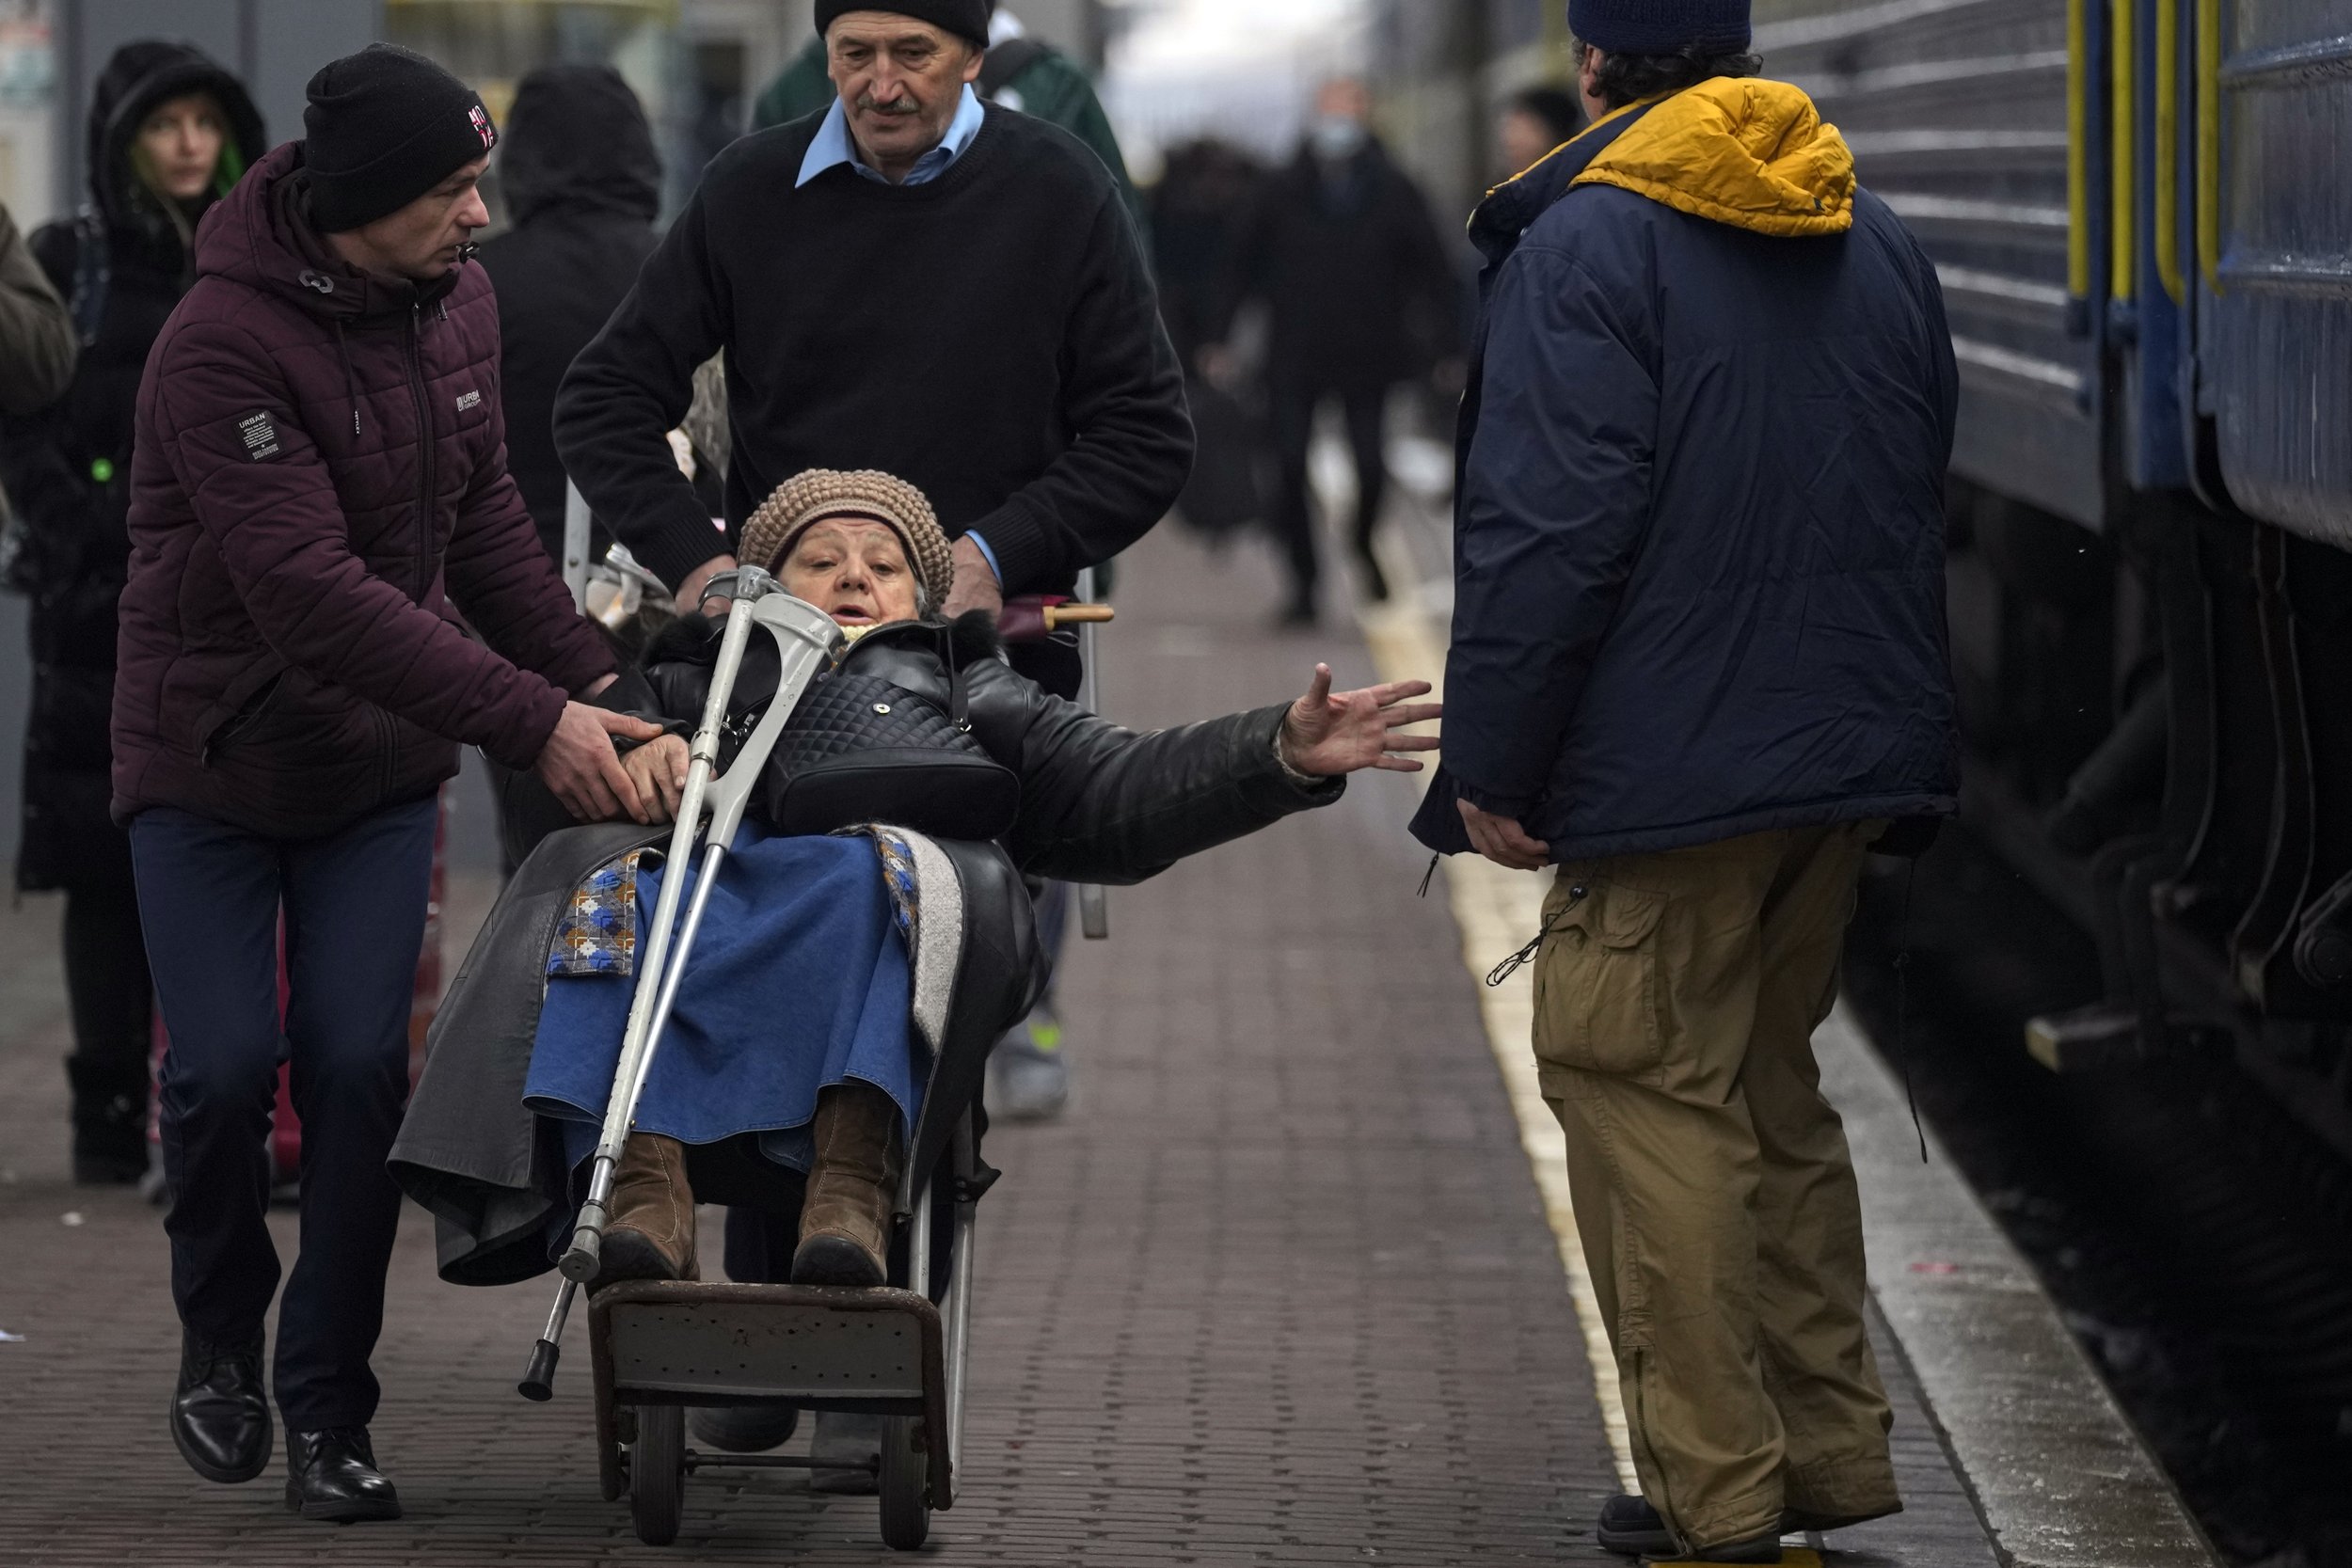  Men push a luggage trolley carrying an elderly lady before boarding a Lviv bound train, in Kyiv, Ukraine, Thursday, March 3, 2022. (AP Photo/Vadim Ghirda) 